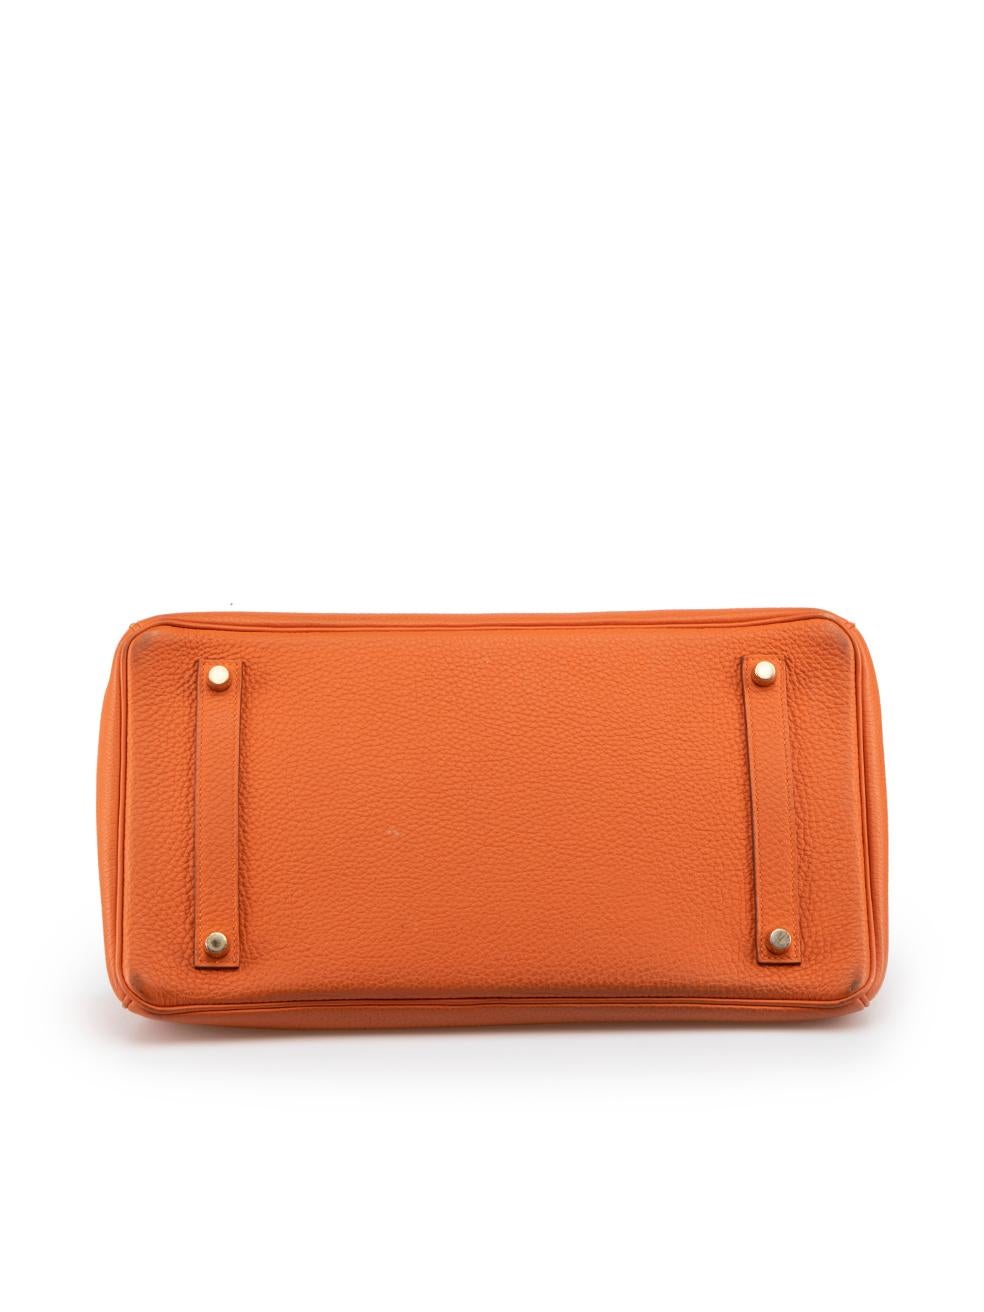 Women's Hermès 2014 Orange Veau Togo Leather GHW Birkin 35 For Sale